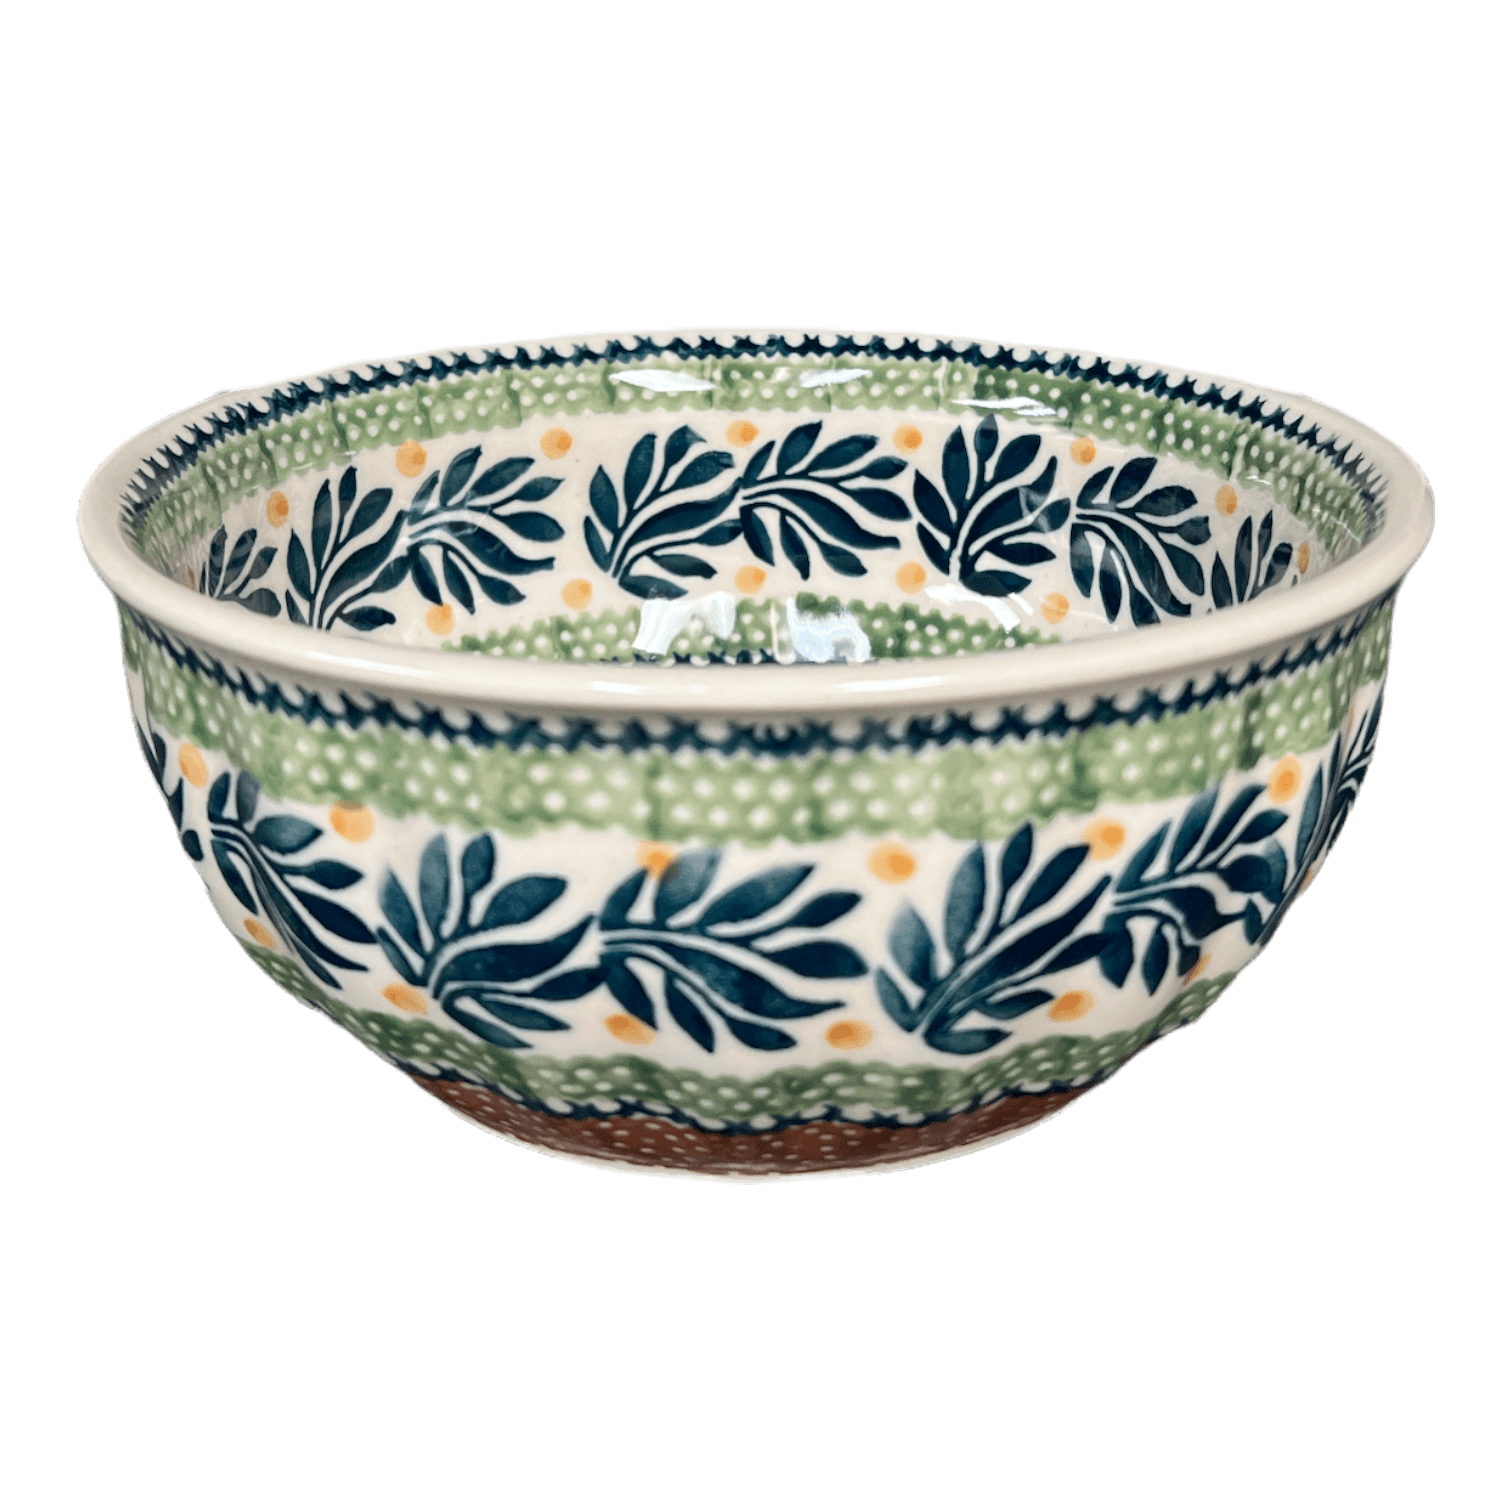 Zaklady Jungle Flower Large Mixing Bowl Polish Pottery